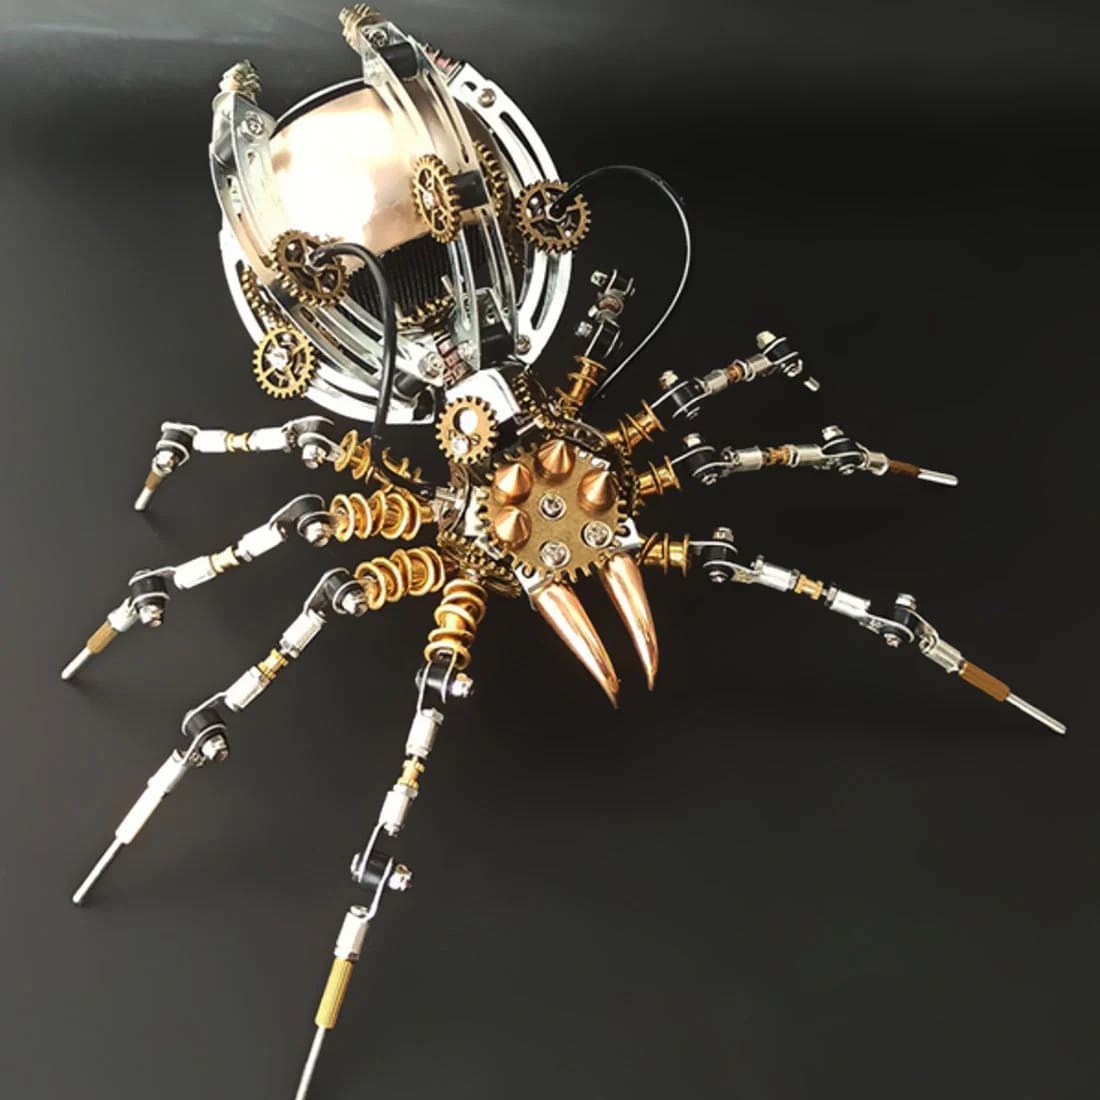 3D spider model + bluetooth speaker